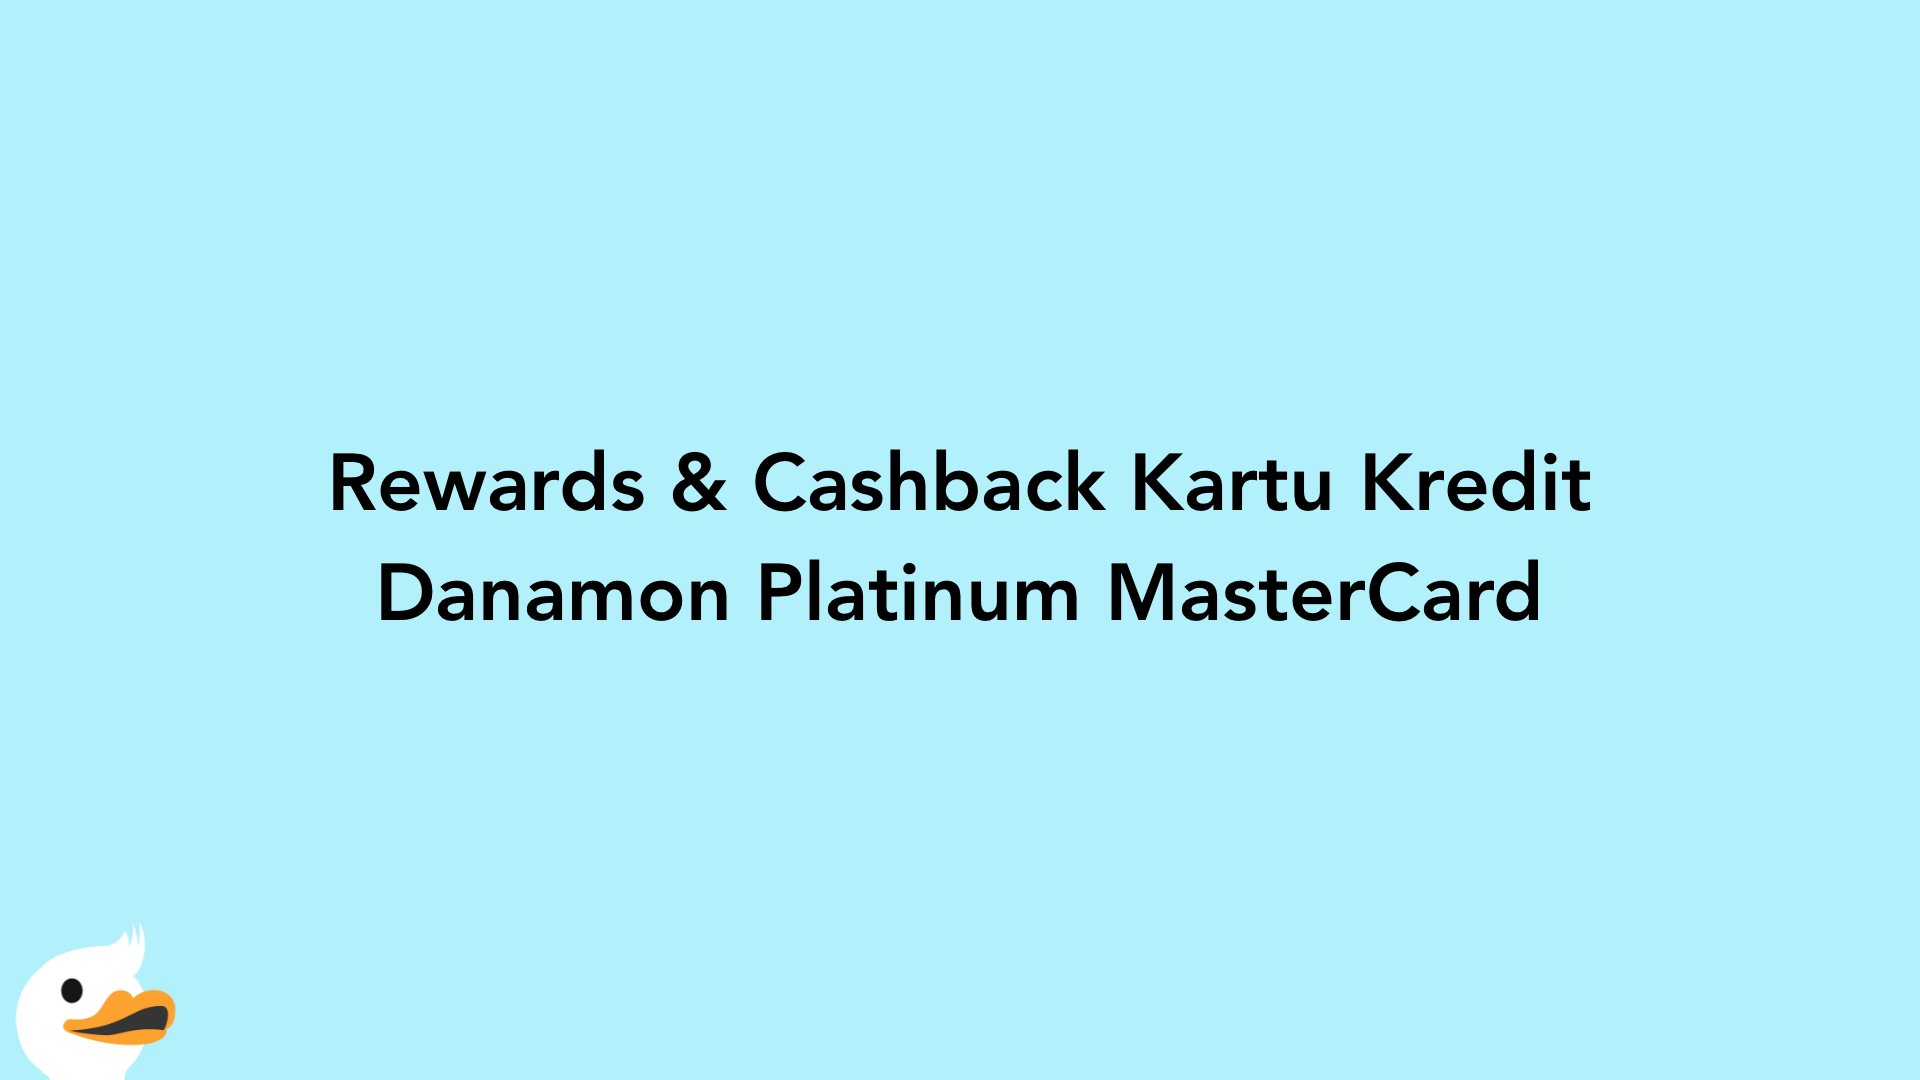 Rewards & Cashback Kartu Kredit Danamon Platinum MasterCard